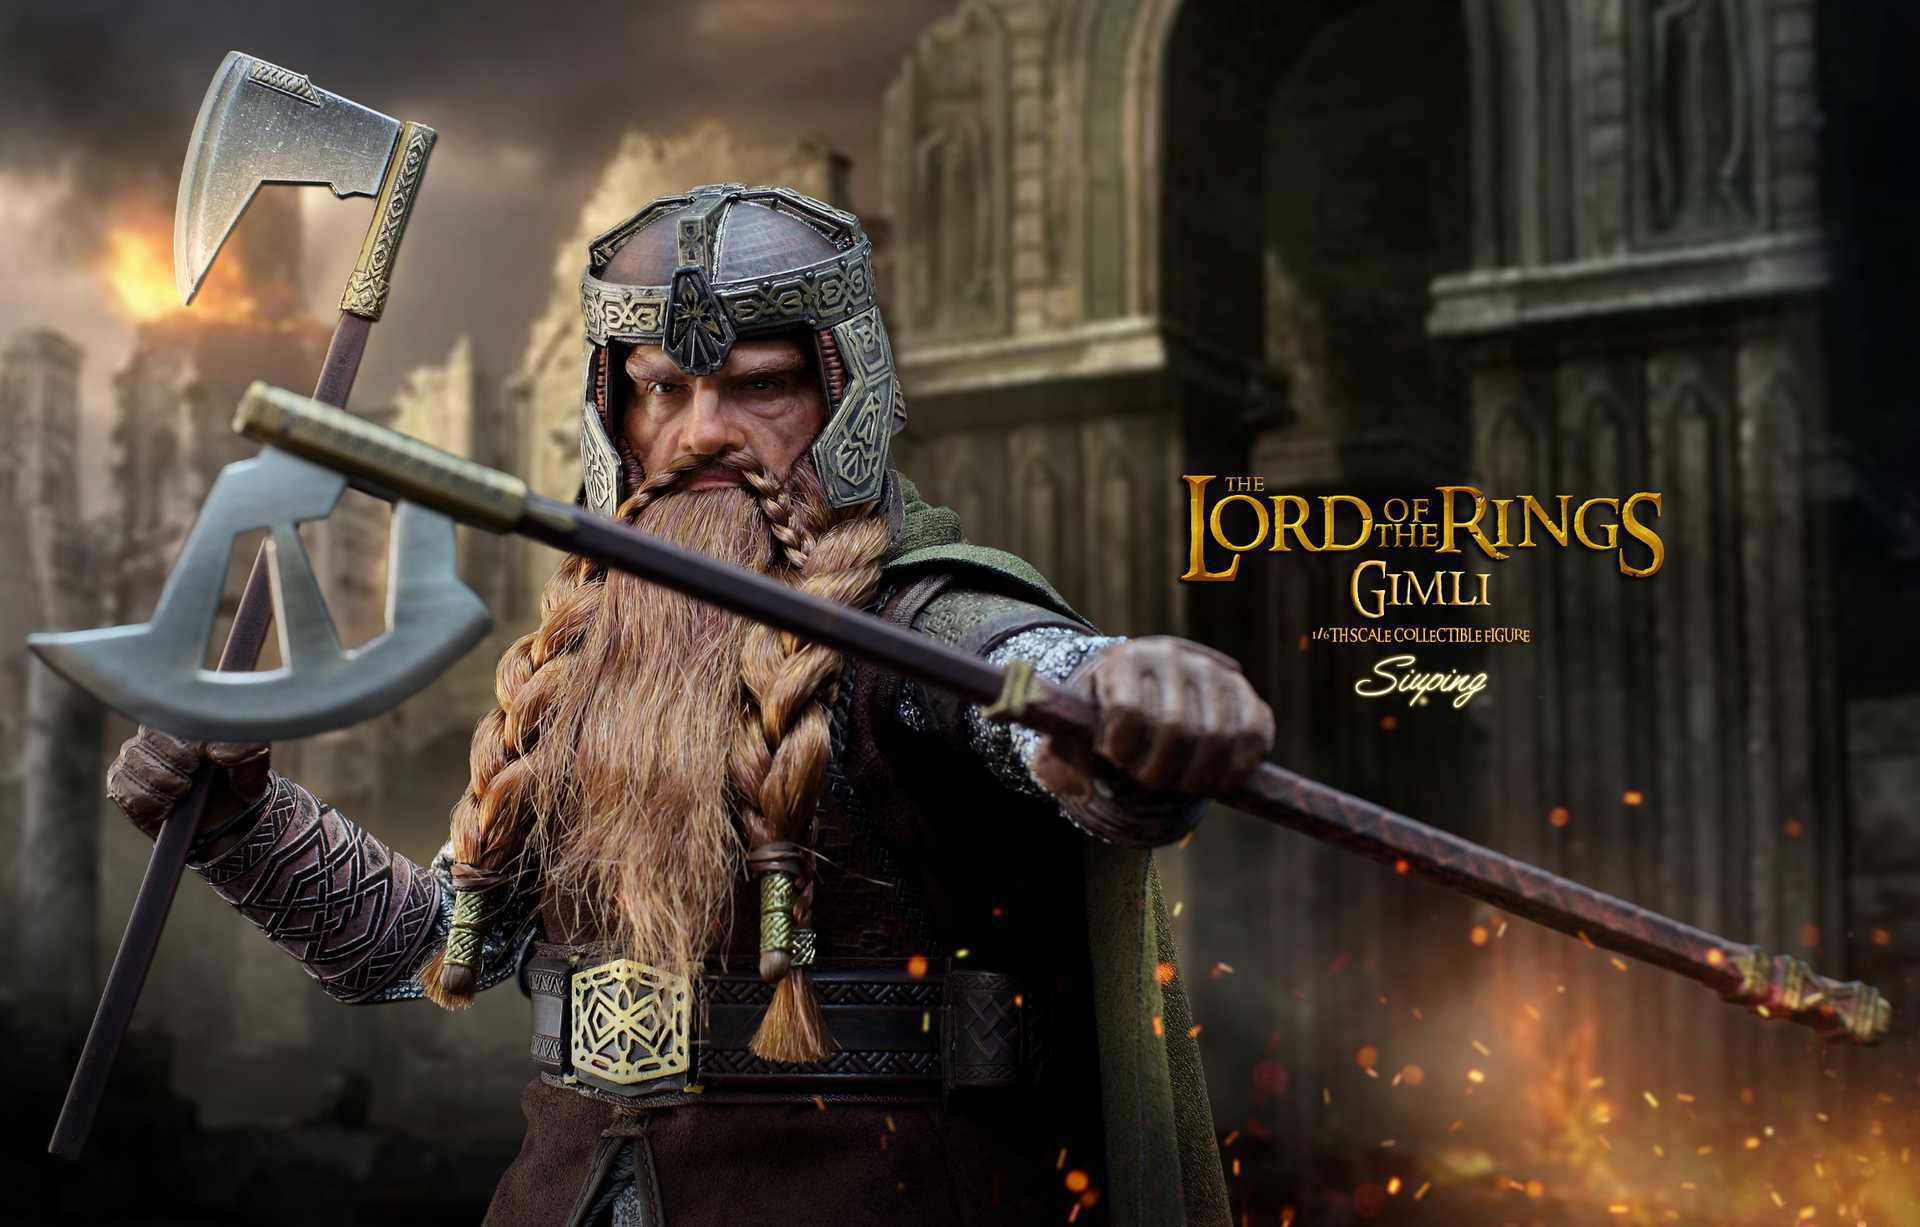 Baldur's Gate 3 - How to Make Gimli from Lord of the Rings - YouTube